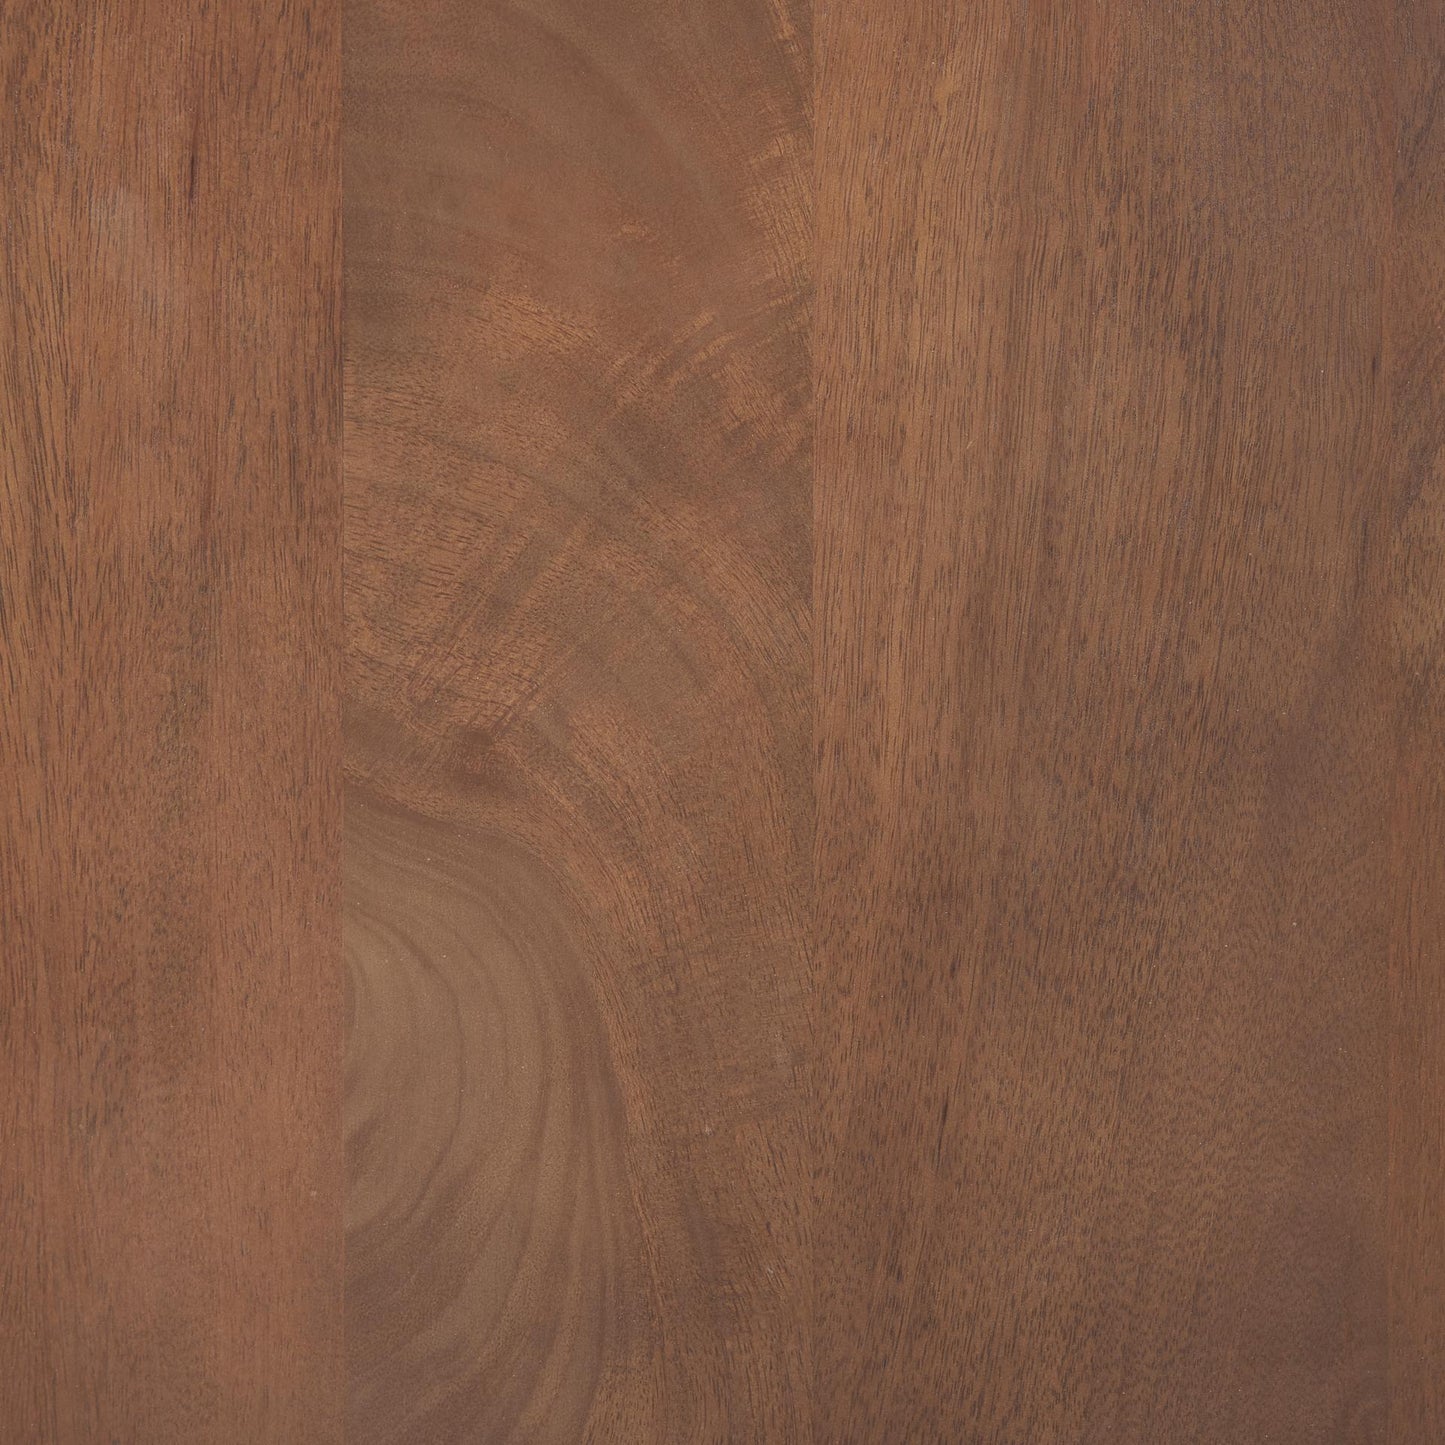 Lillie Medium Brown Wood 4 Door Tray Top Sideboard